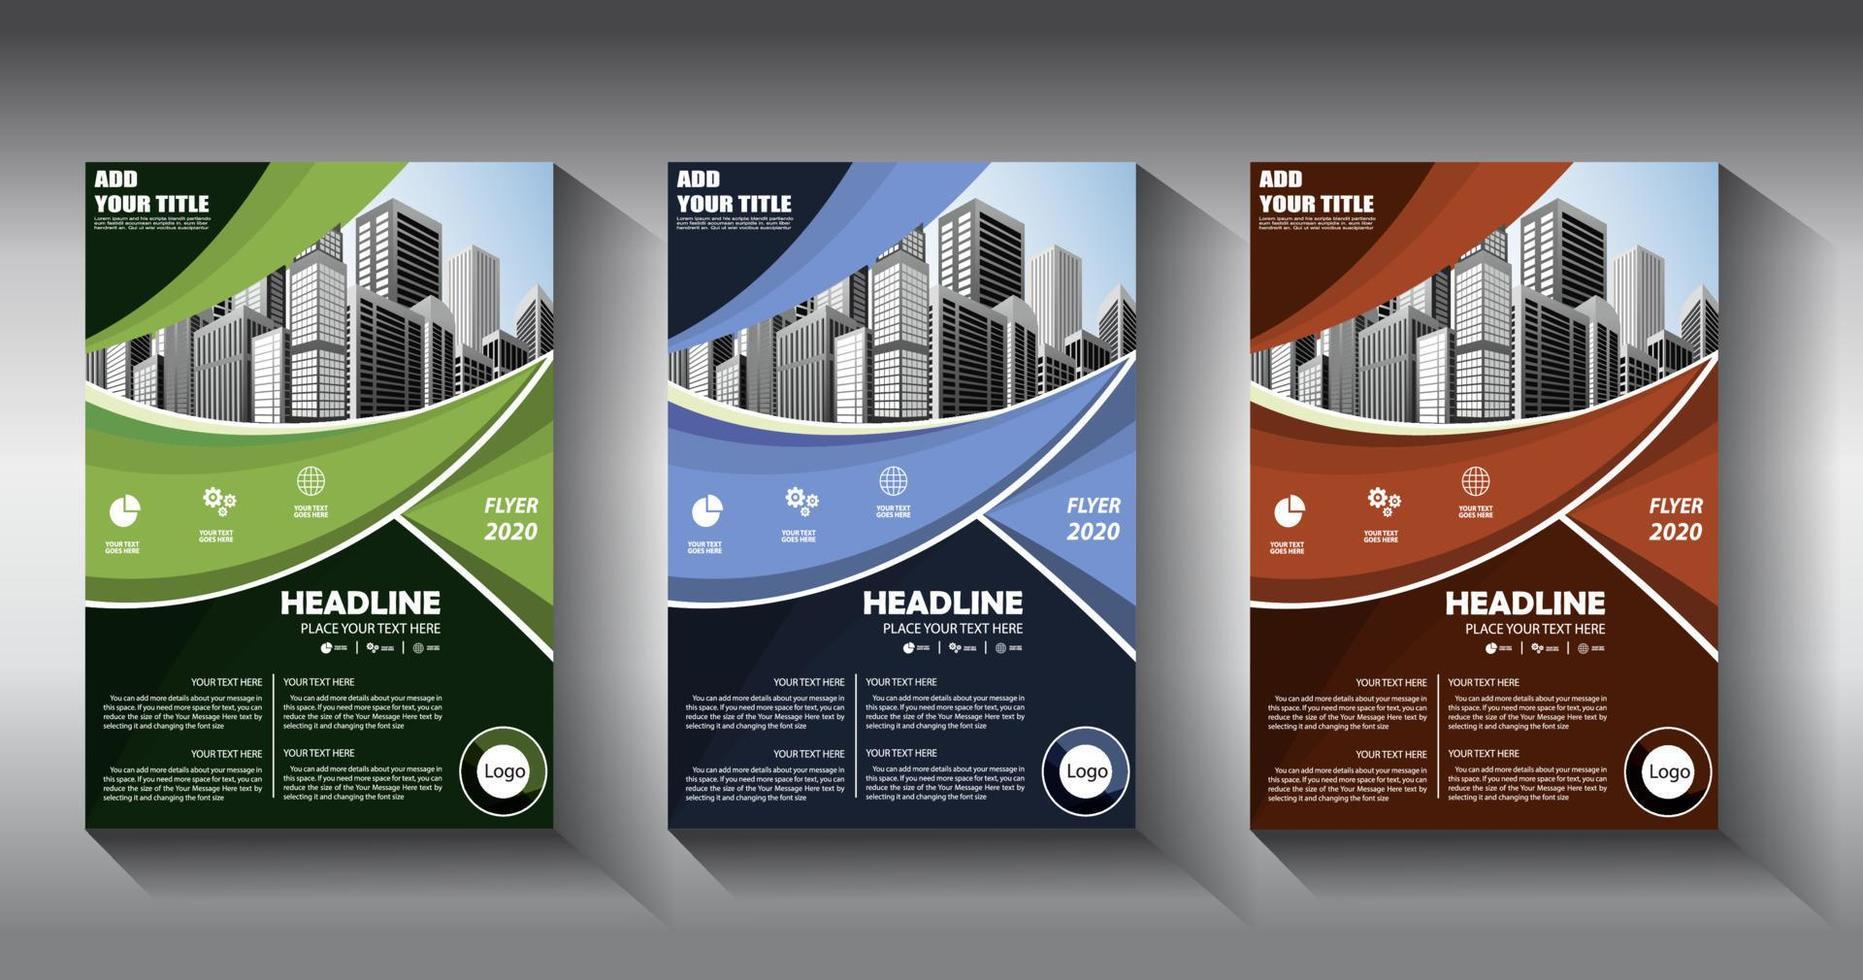 folleto negocio plantilla diseño de folleto informe anual vector